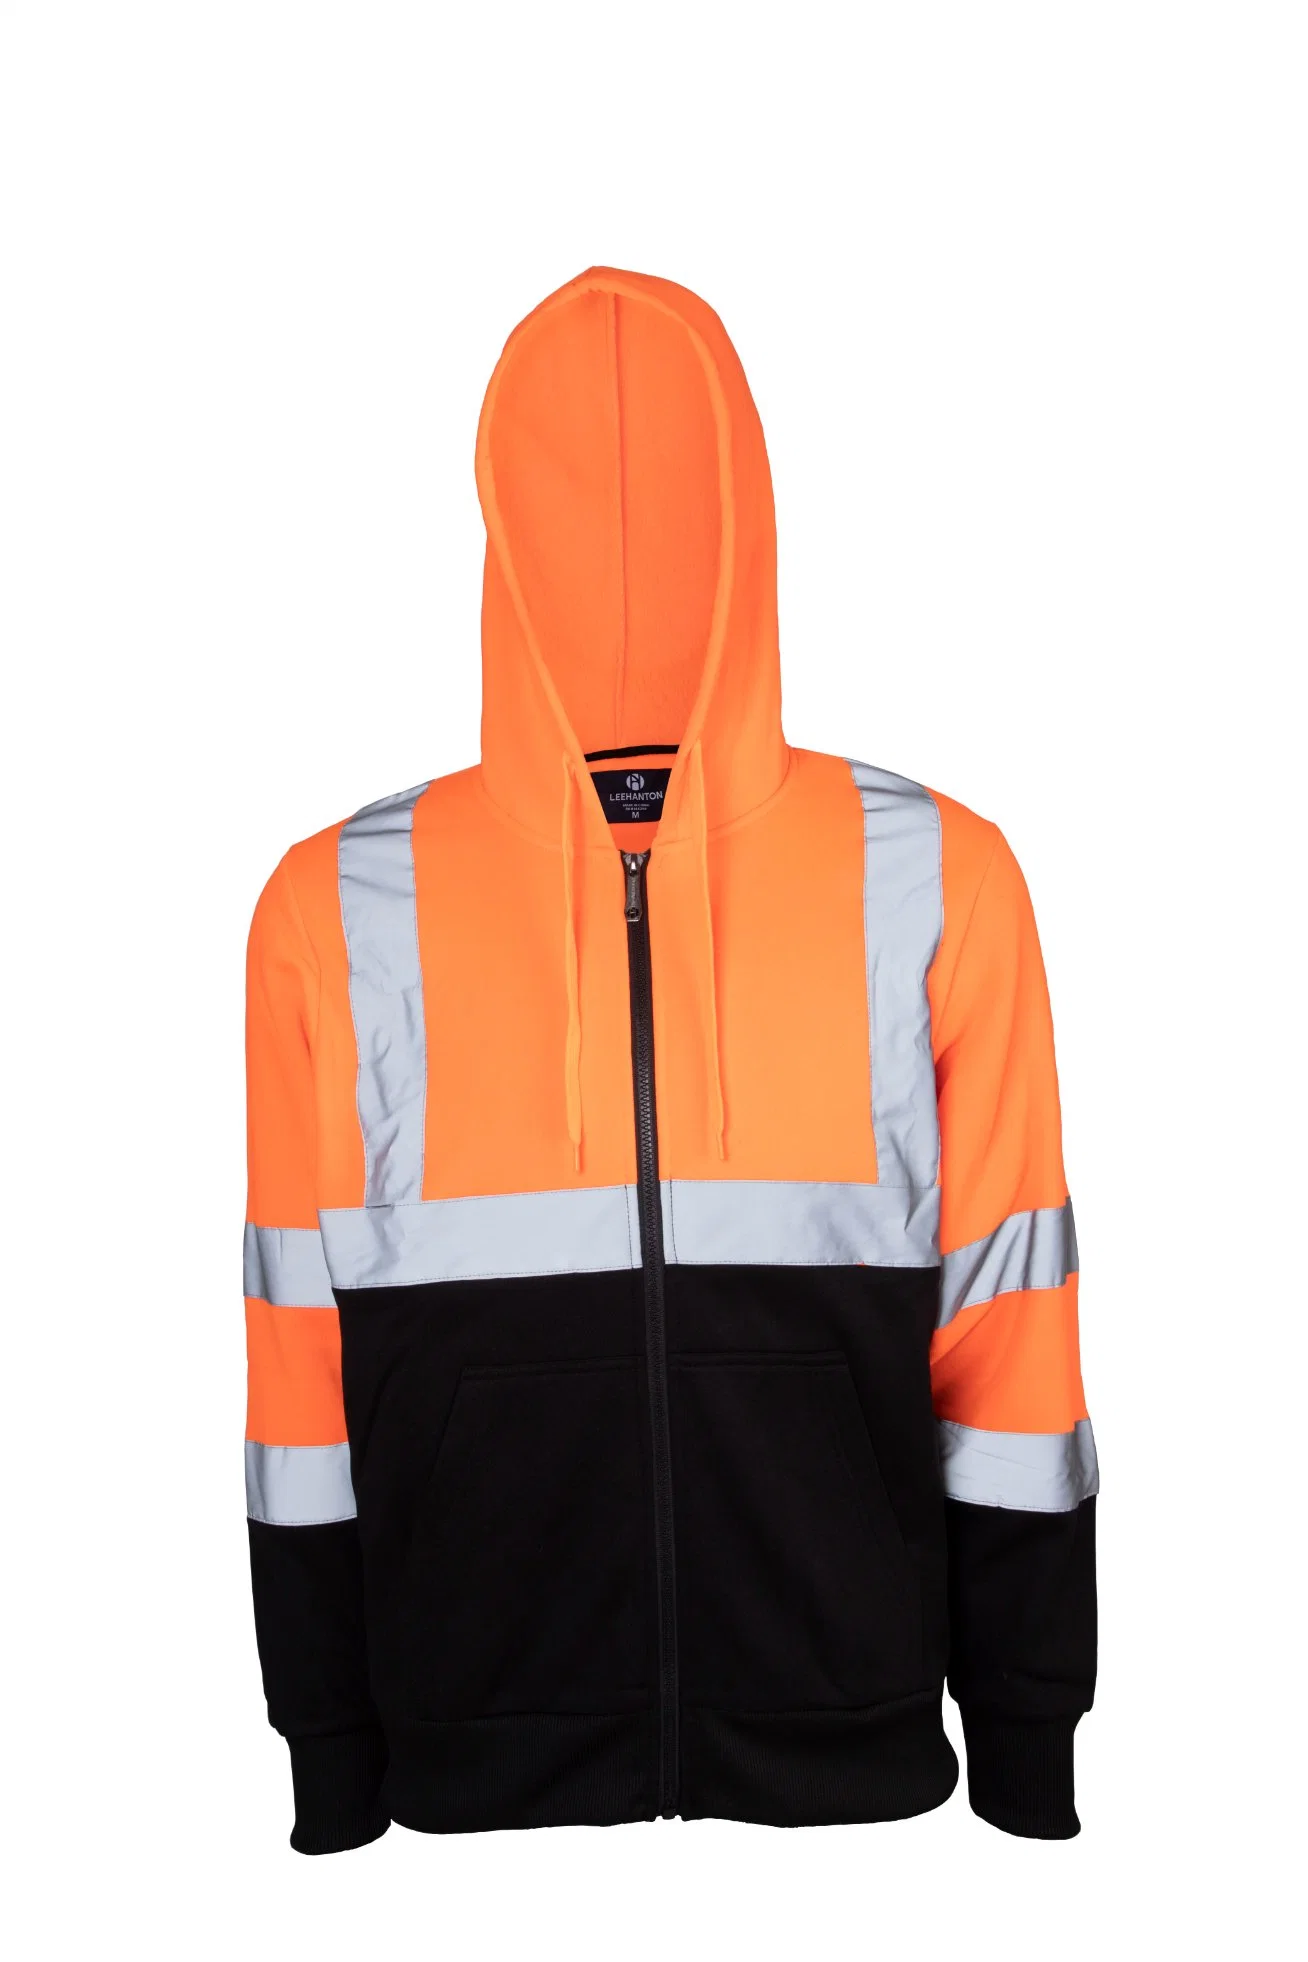 Men&prime; S Workwear Shirt Reflective Safety Uniforms Full Sleeves Men Hoodies